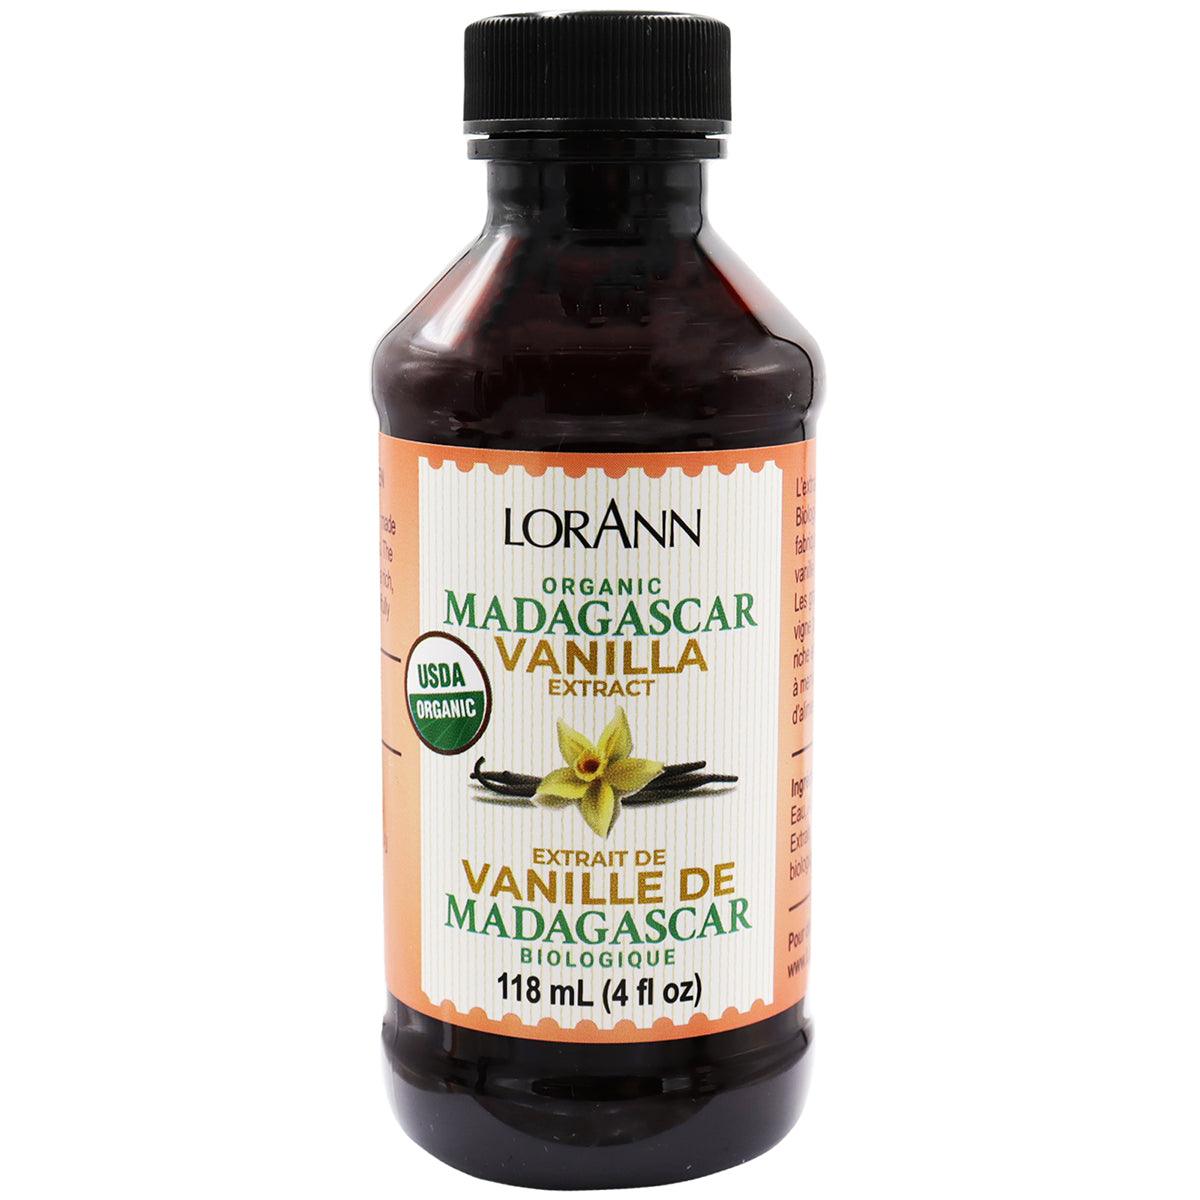 Organic Madagascar Vanilla Extract, 4 oz. (118 ml) - ViaCheff.com